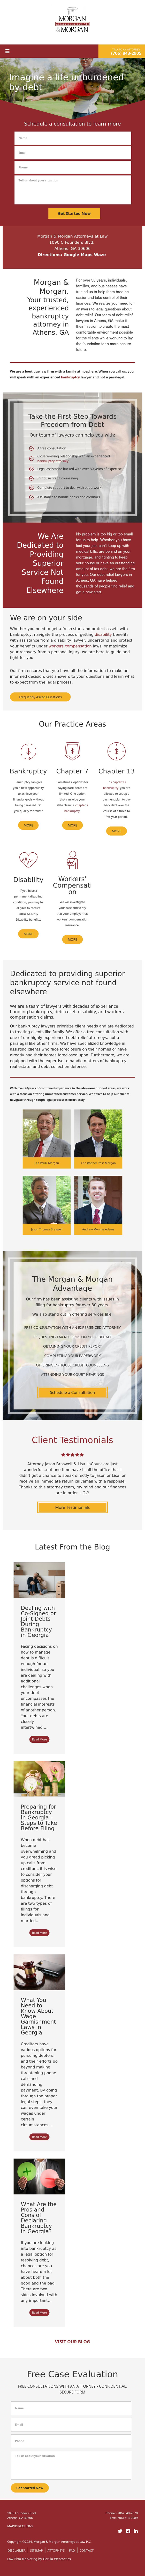 Morgan & Morgan Attorneys at Law P.C. - Athens GA Lawyers